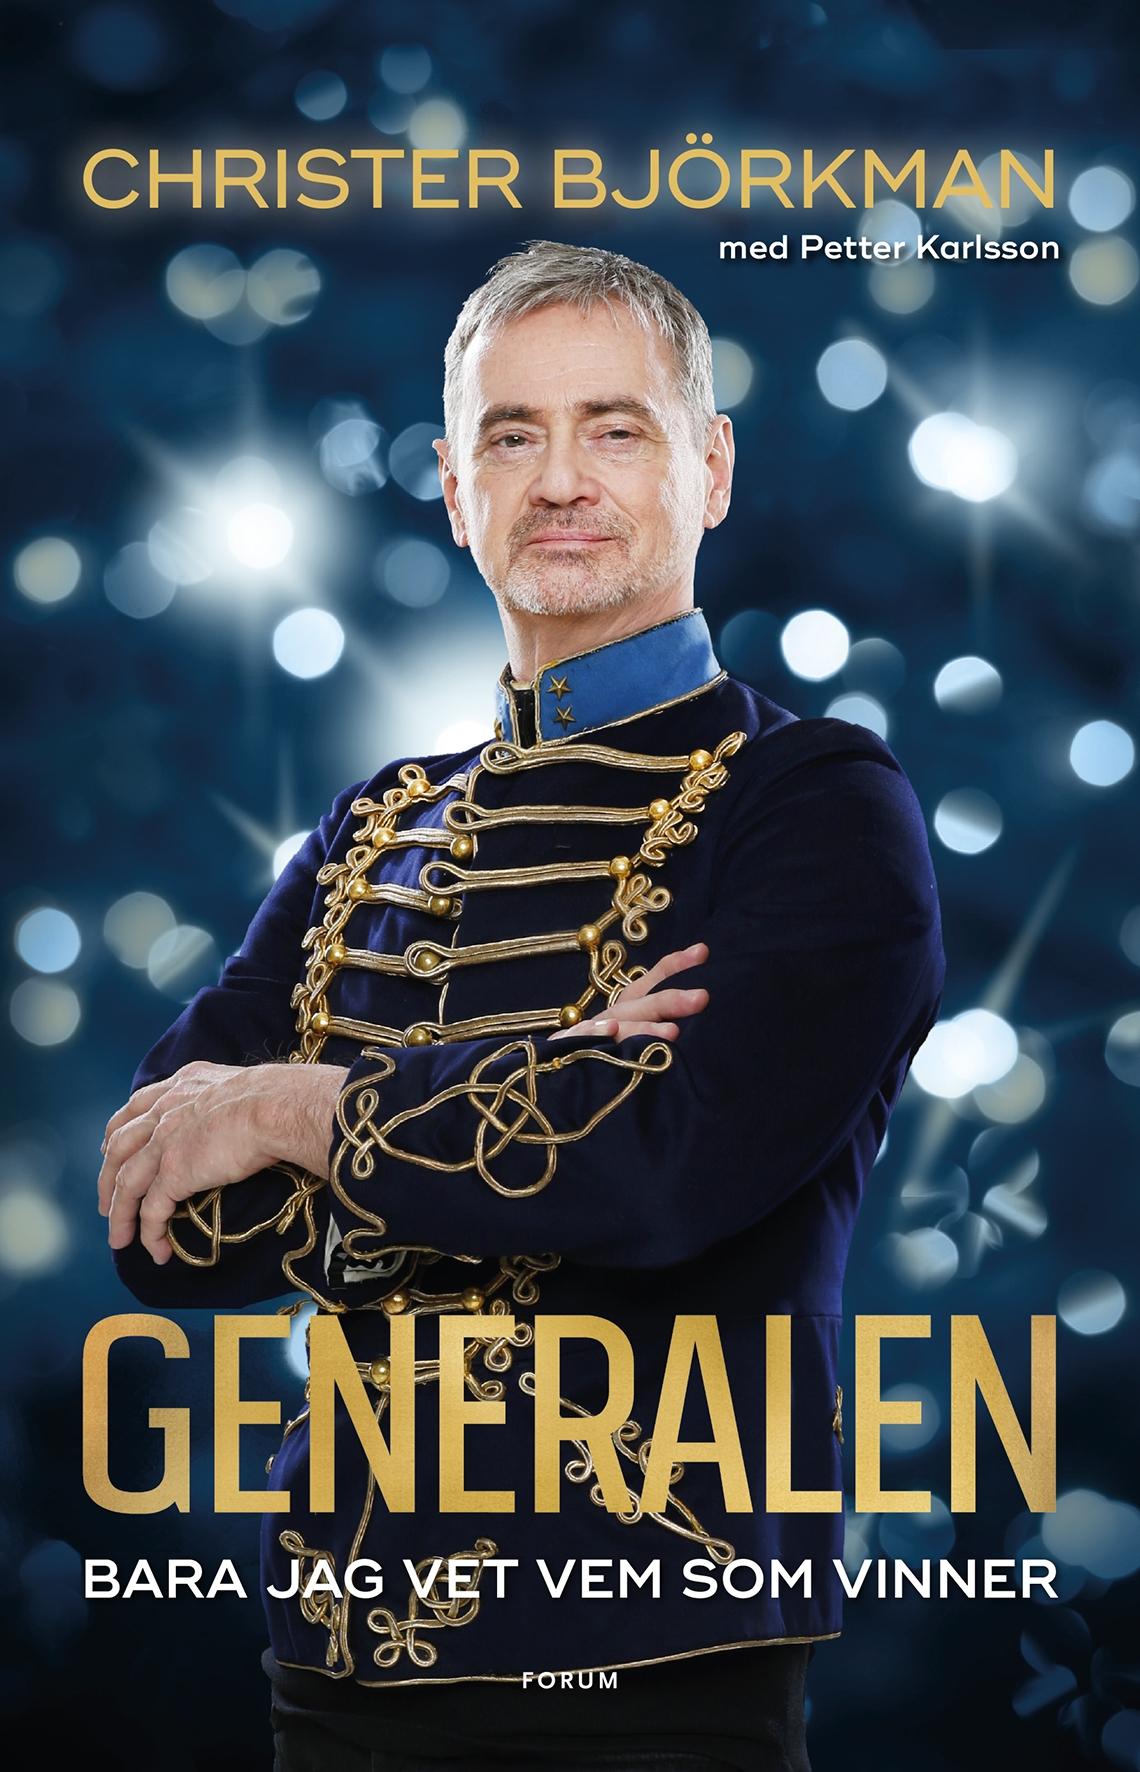 Christer Björkmans självbiografi ”Generalen” släpps 26 september.